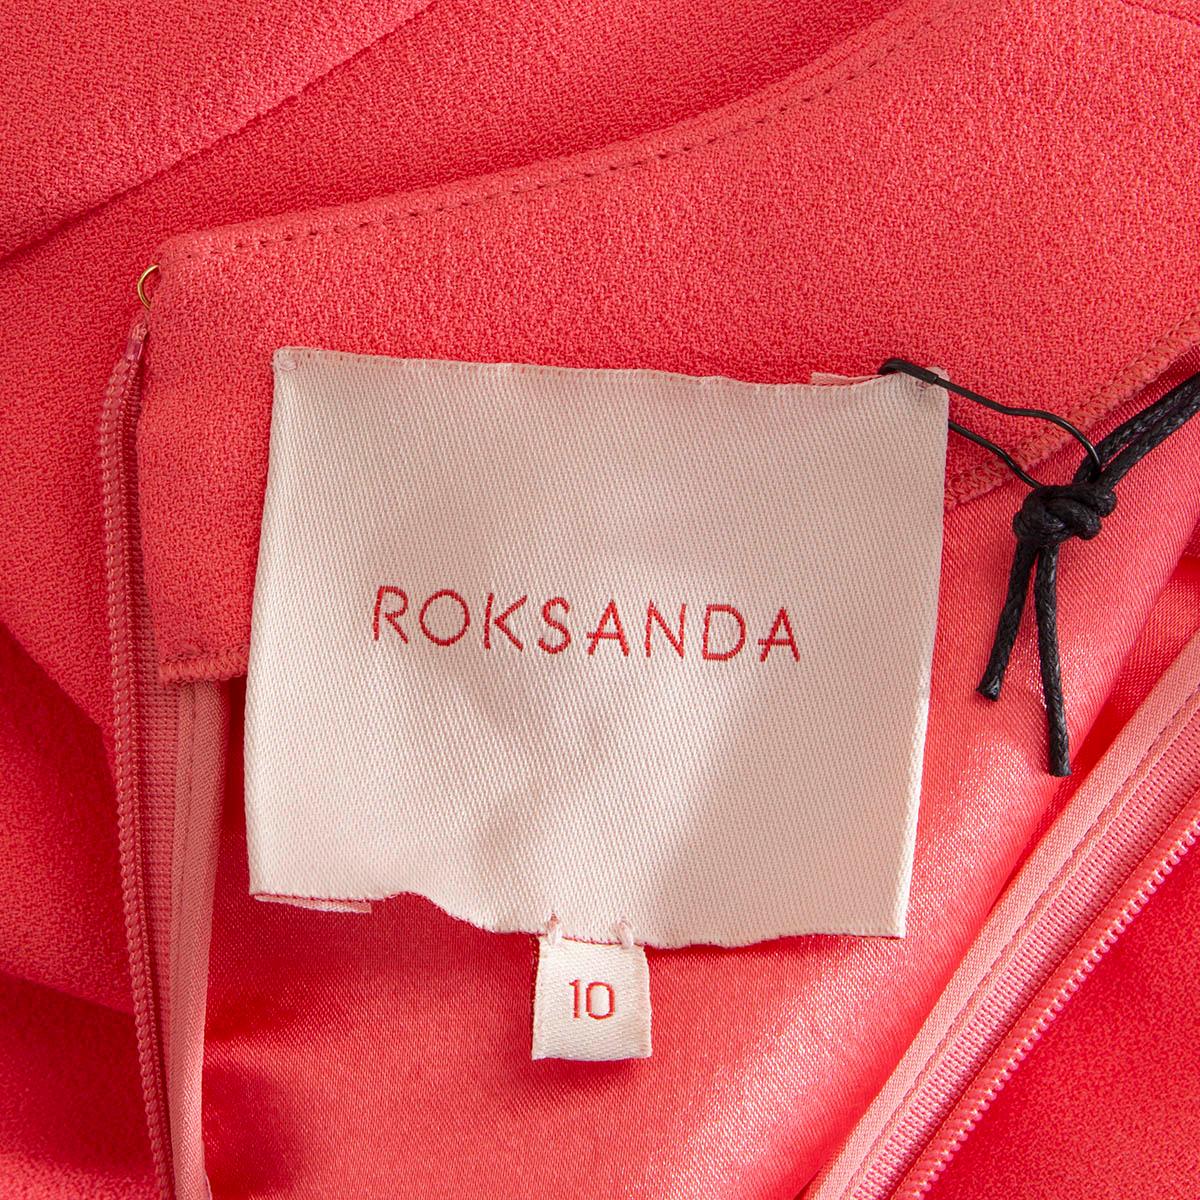 ROKSANDA pink TRUFFAUT BELL SLEEVE Blouse Shirt 10 S 1